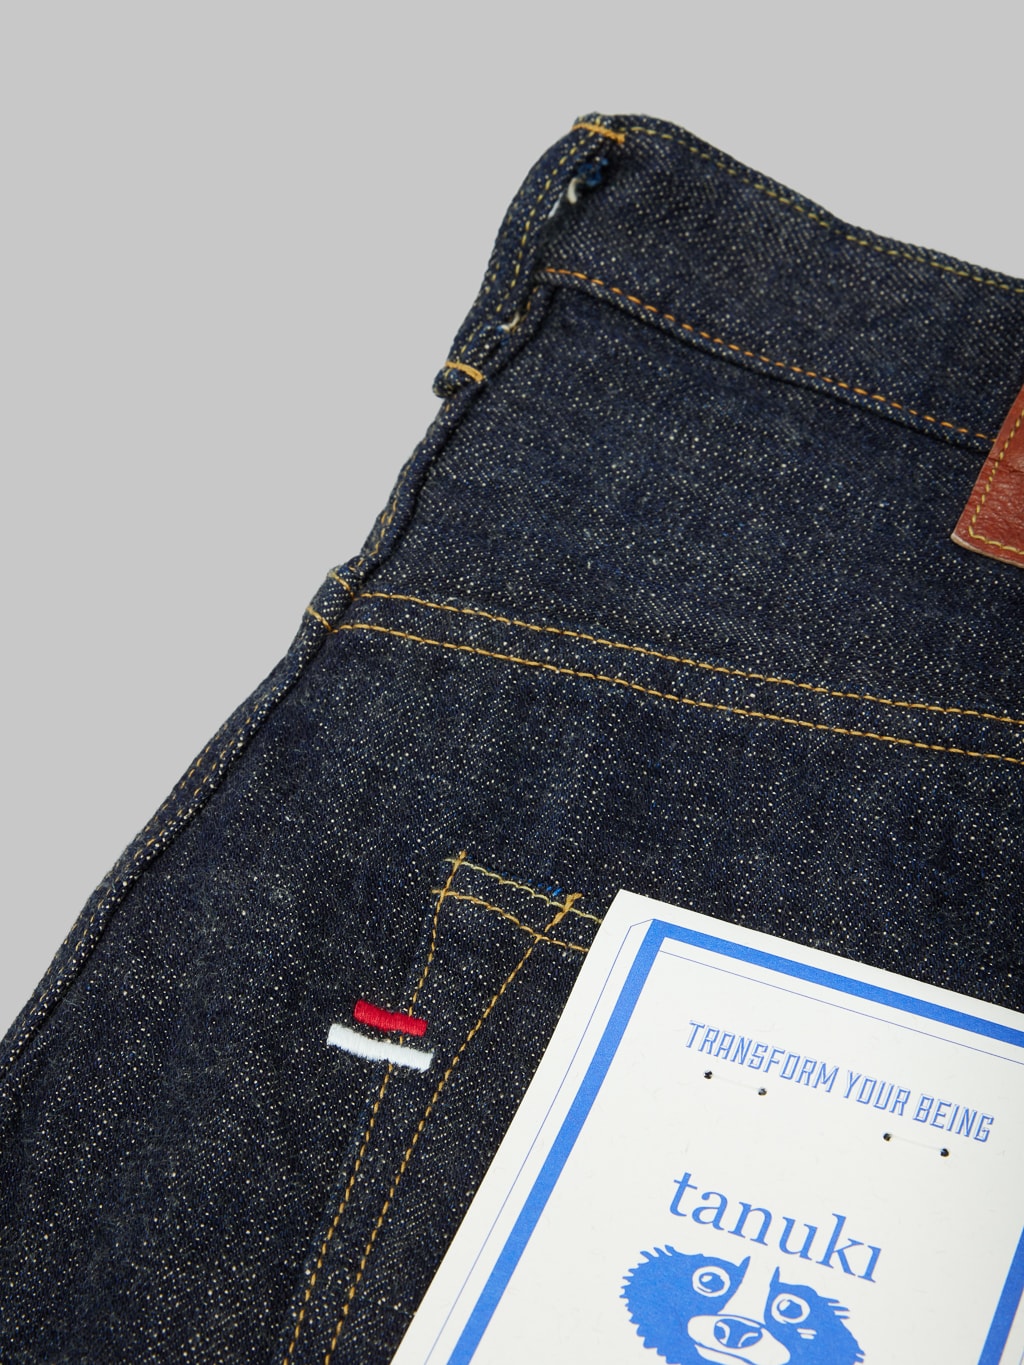 Tanuki Zetto Benkei High Tapered Jeans embroided brand logo